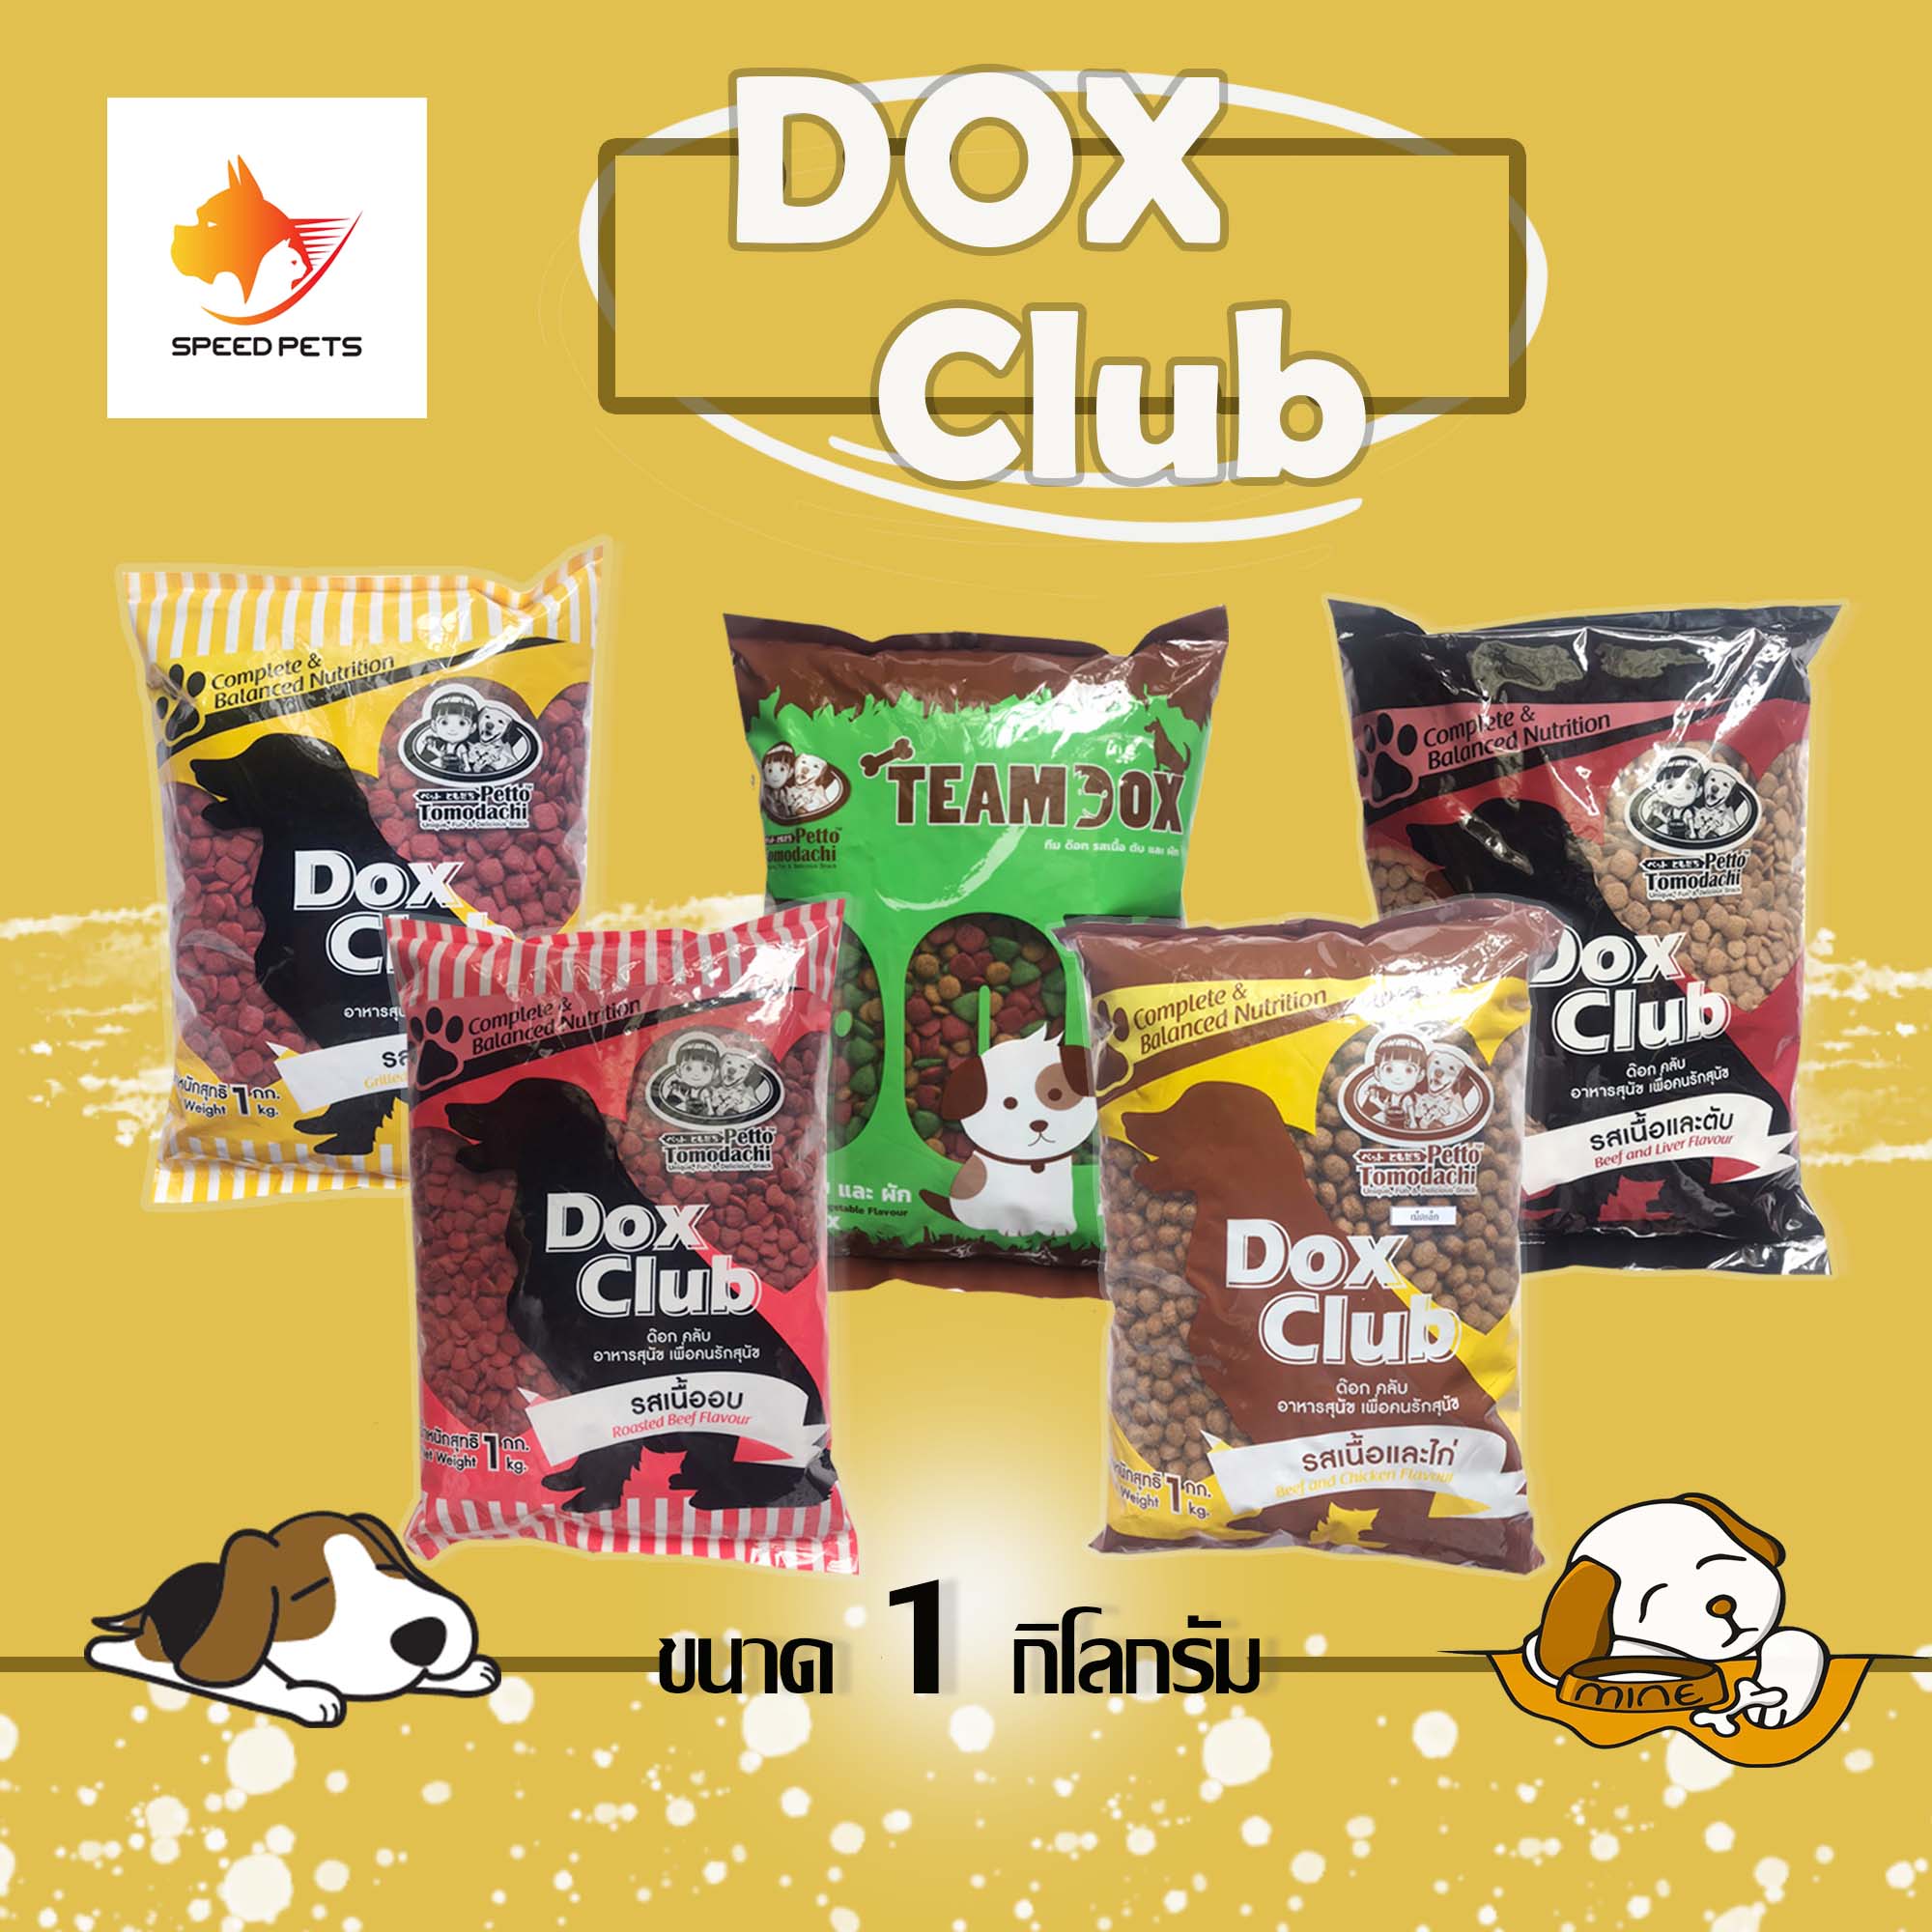 Dox Club / Team Dox dog food อาหารสุนัขสำหรับสุนัขอายุ 1ปีขึ้นไป ขนาด 1 กก.